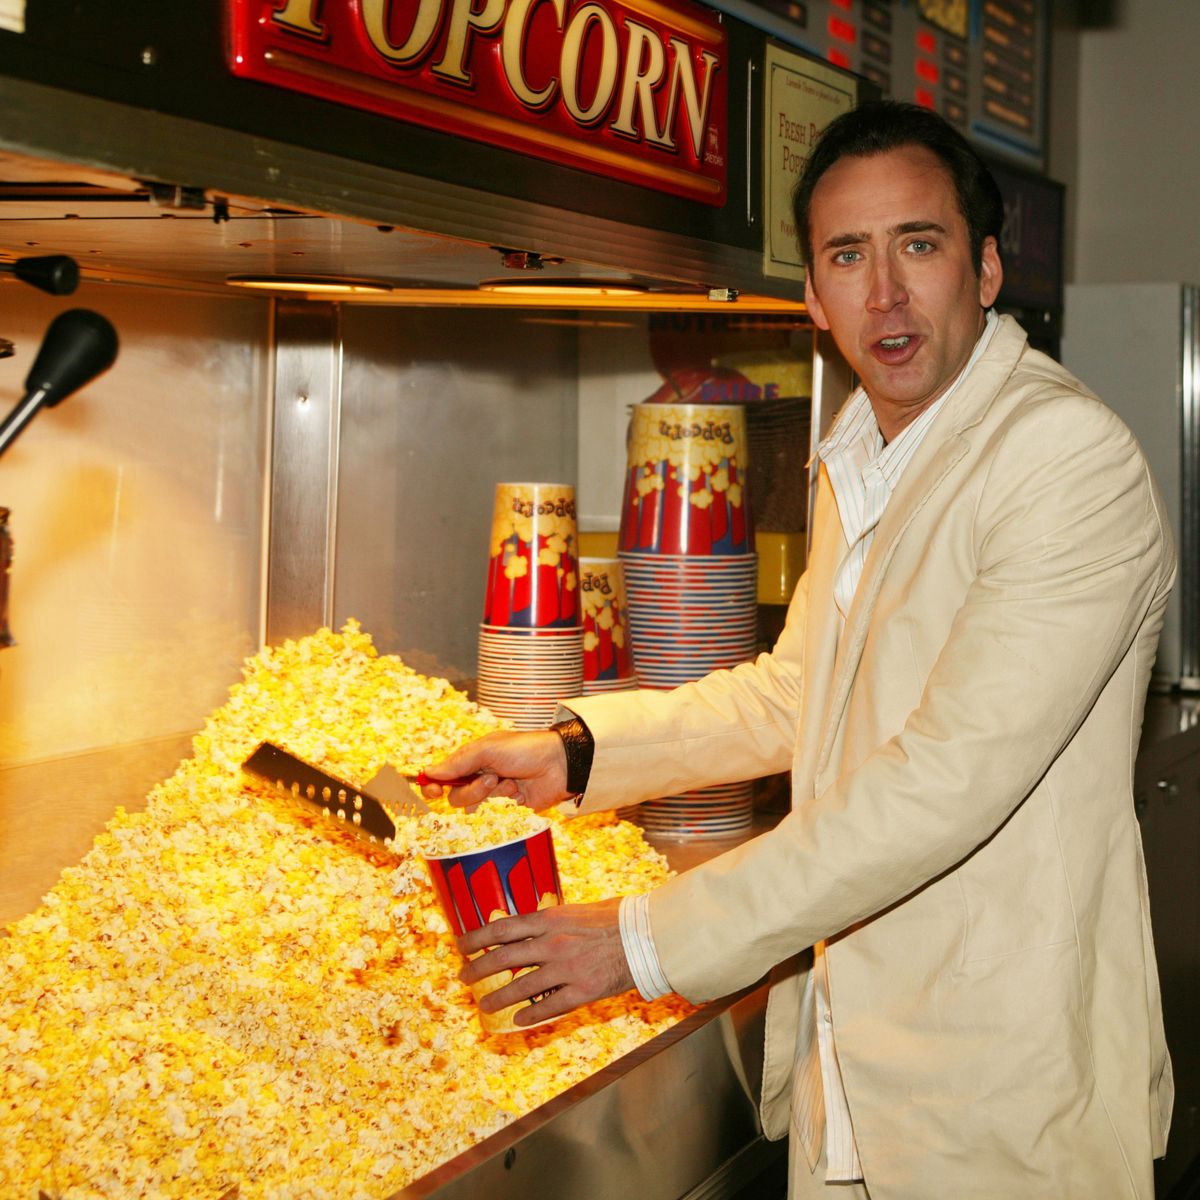 best popcorn popper